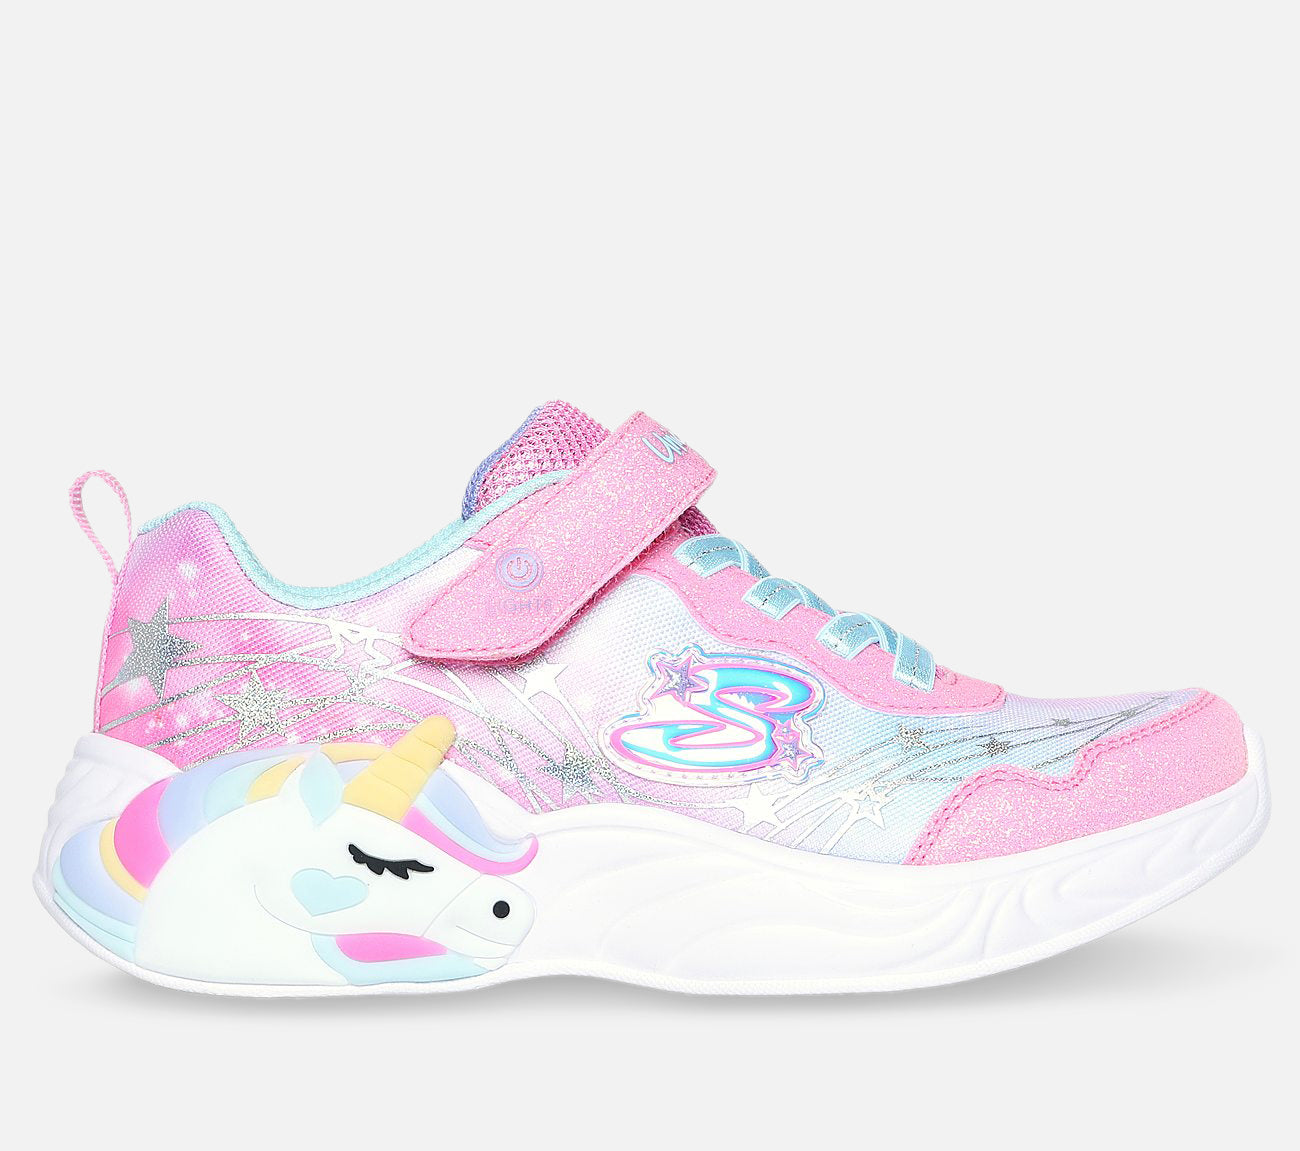 Unicorn Dreams - Wishful Magic Shoe Skechers